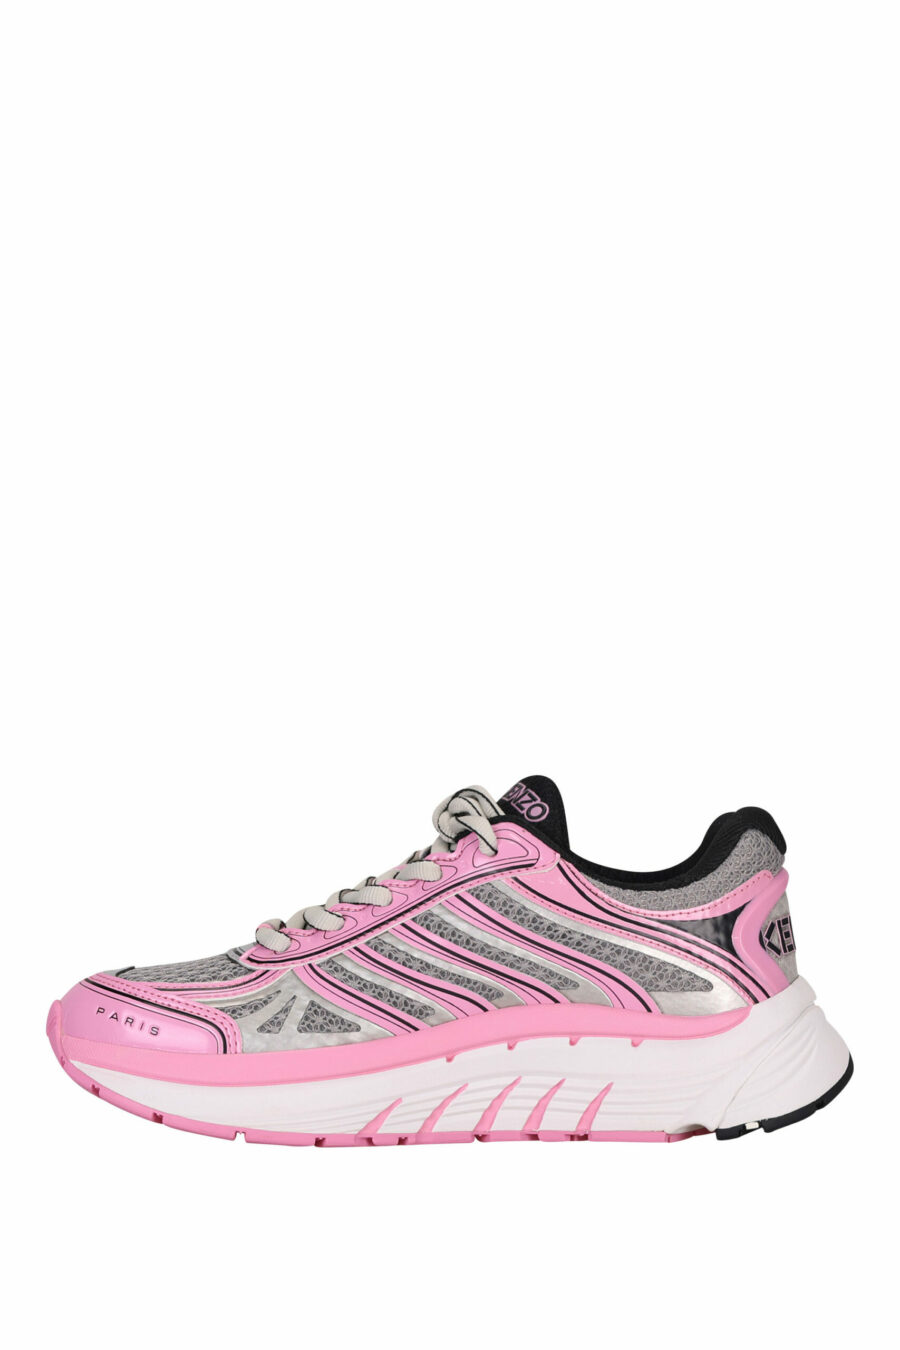 Zapatillas grises con rosa "kenzo tech runner" - 3612230548671 2 scaled